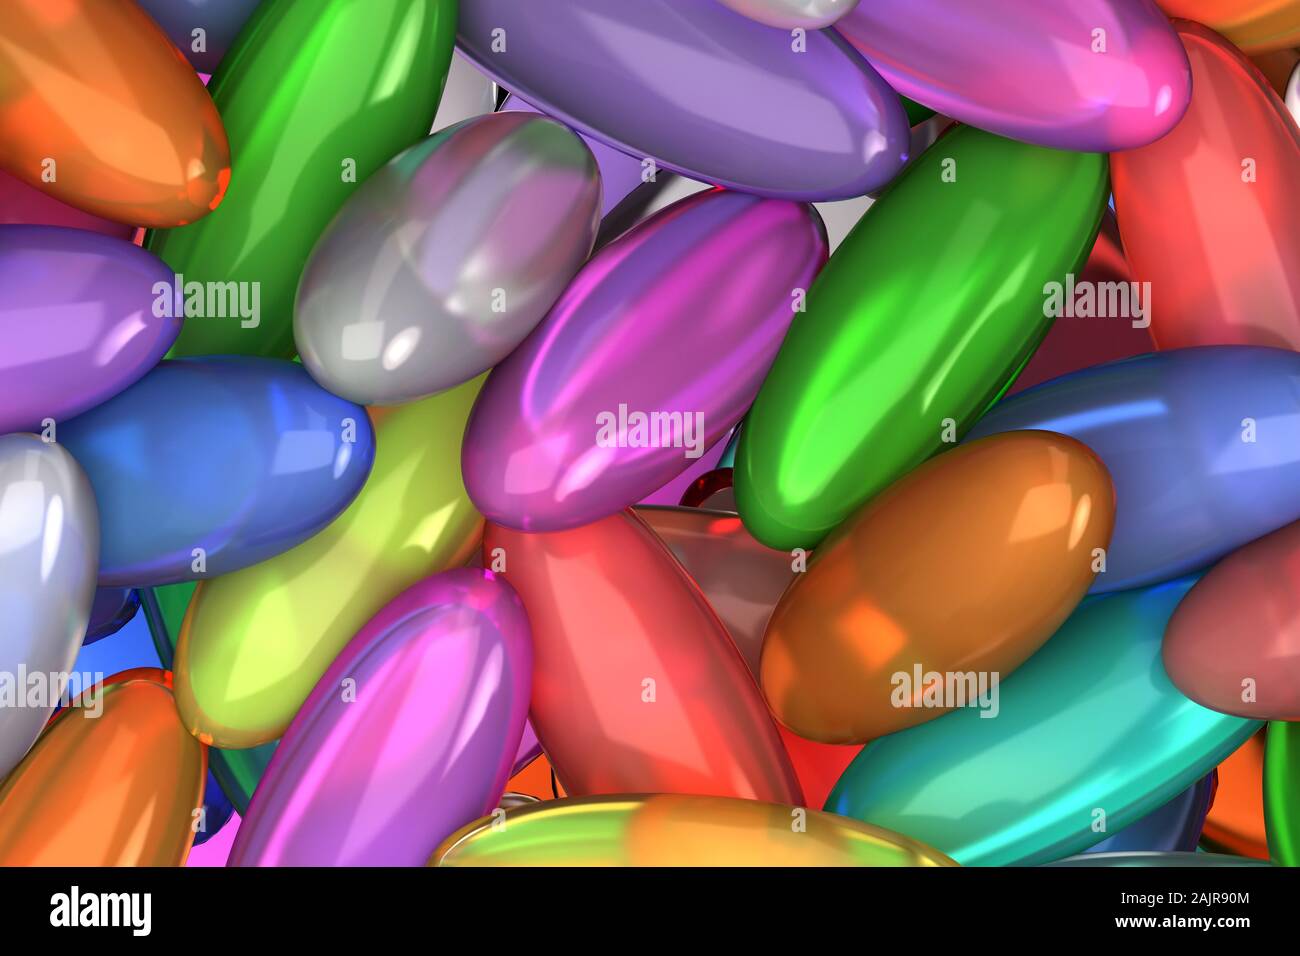 Stack of colorful vitamin capsules Stock Photo